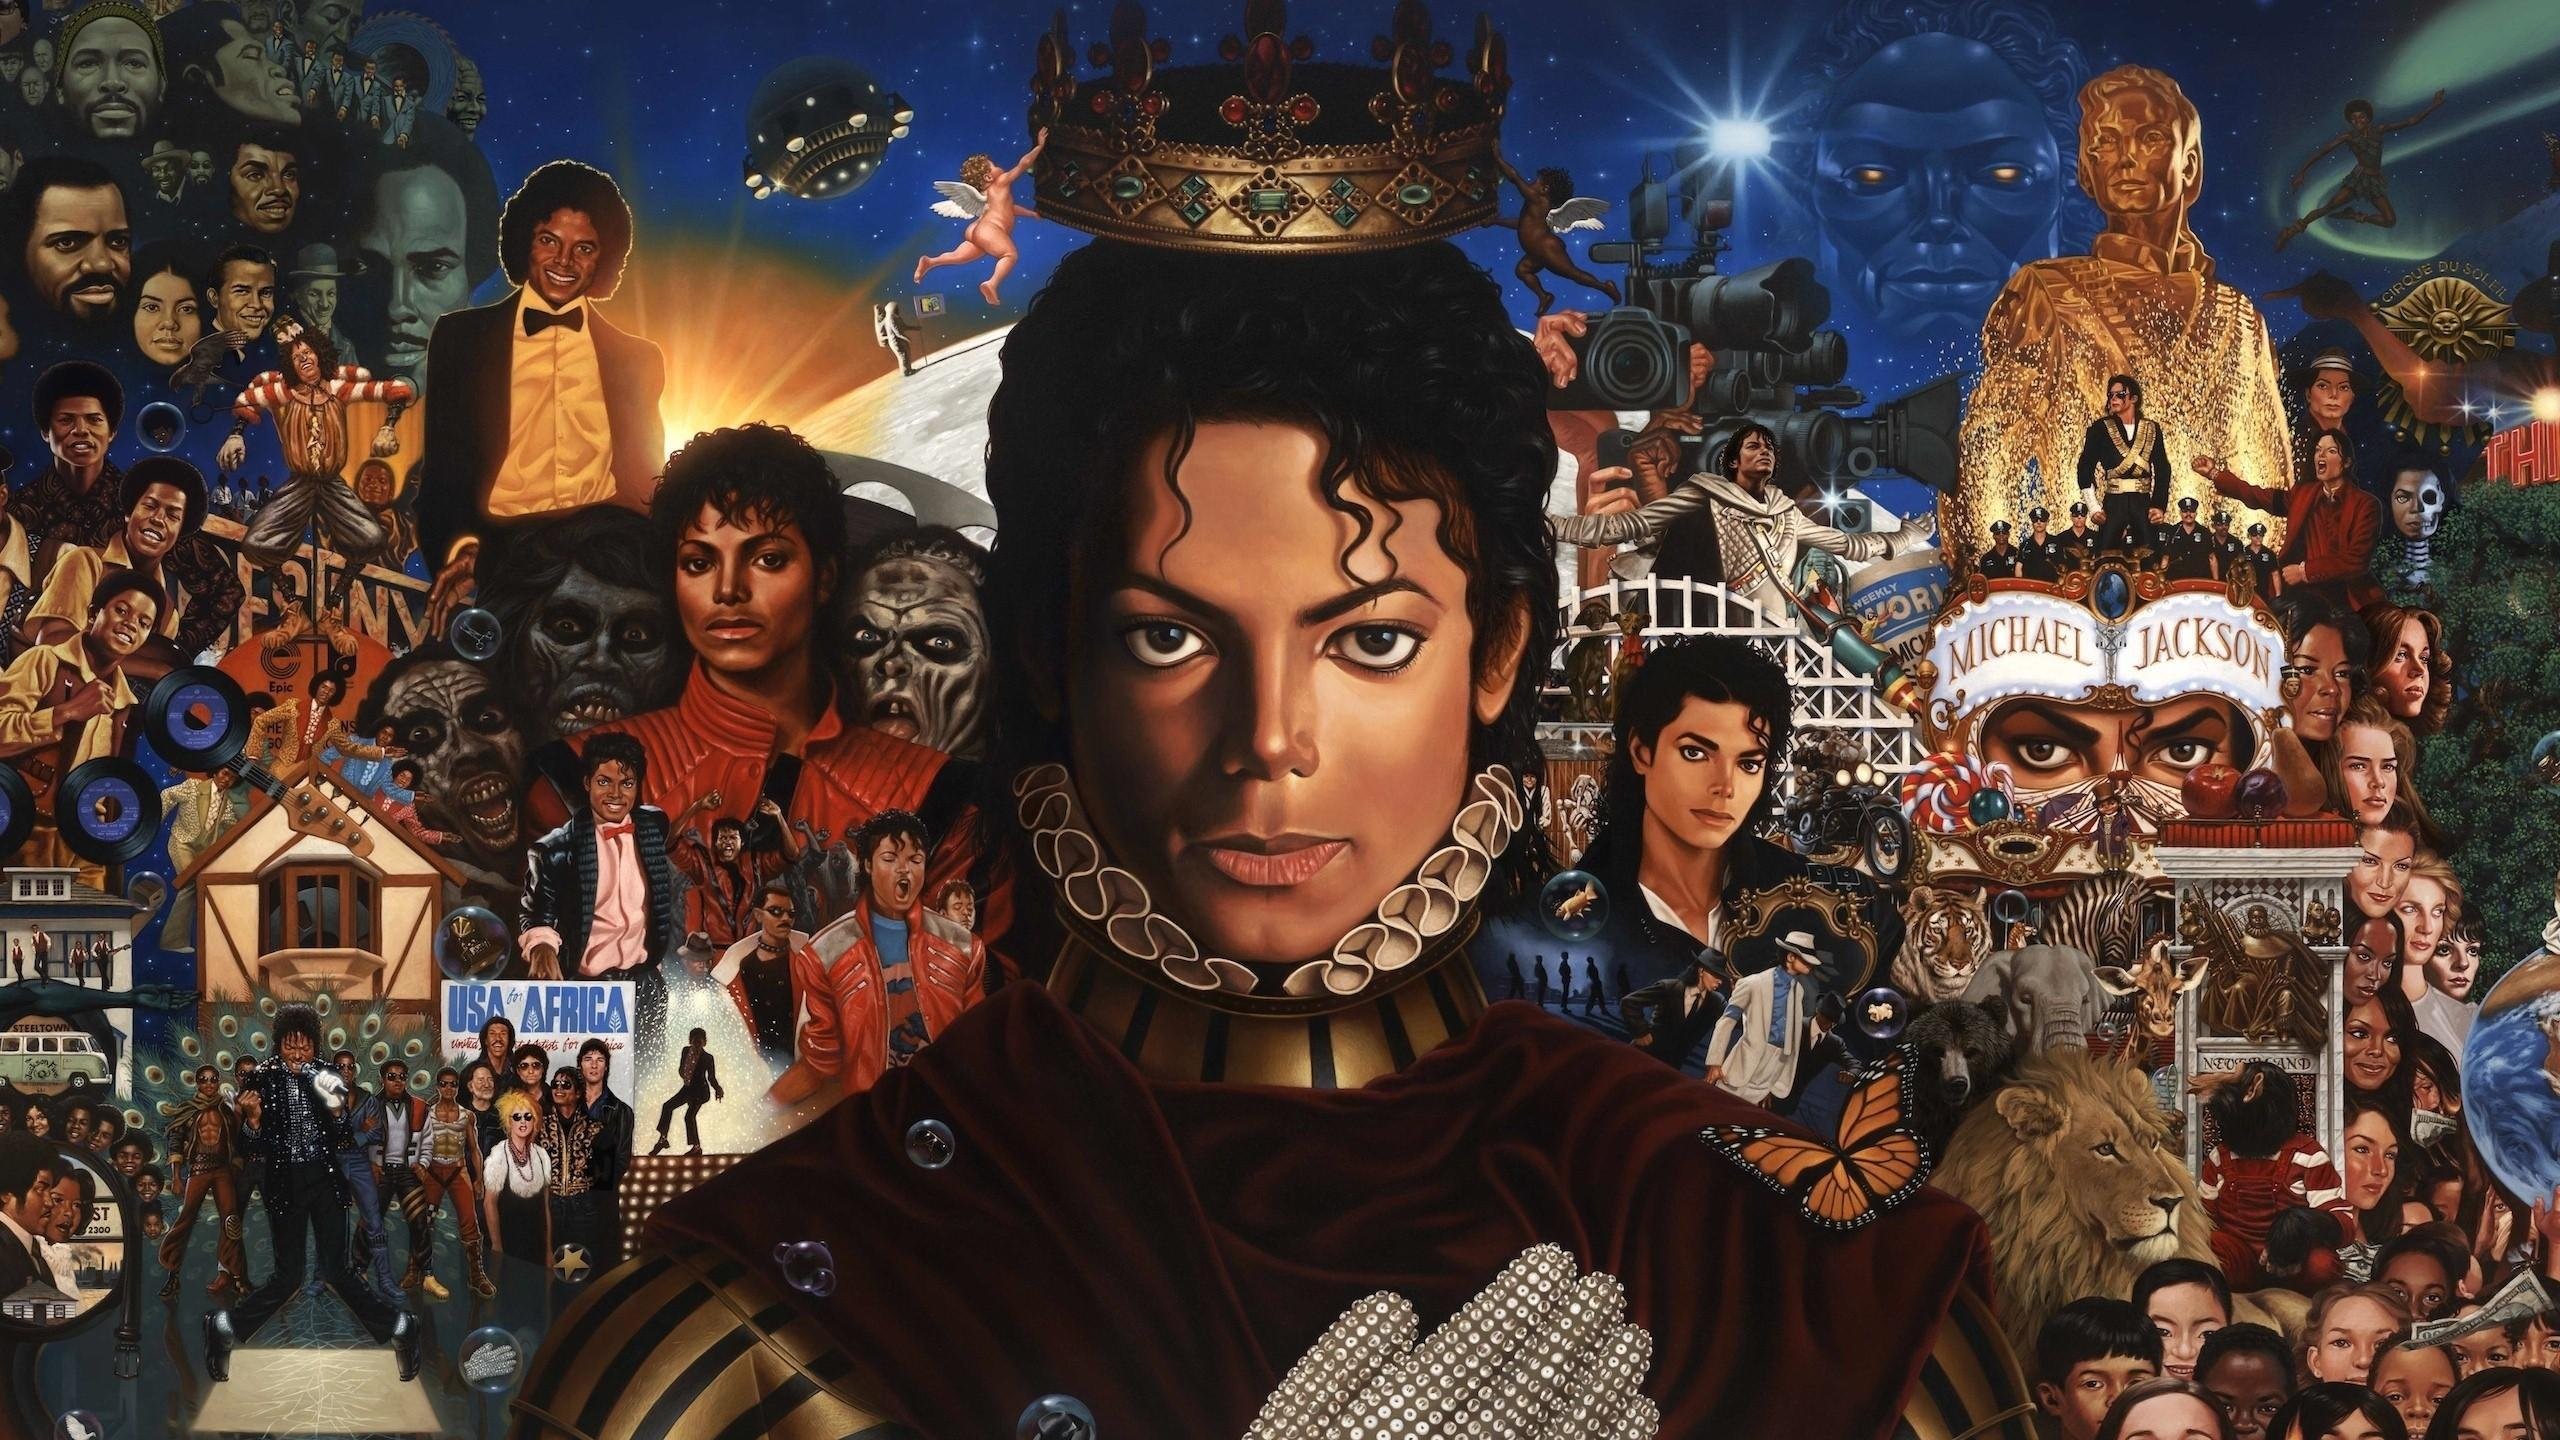 2560x1440 Michael Jackson Album Cover